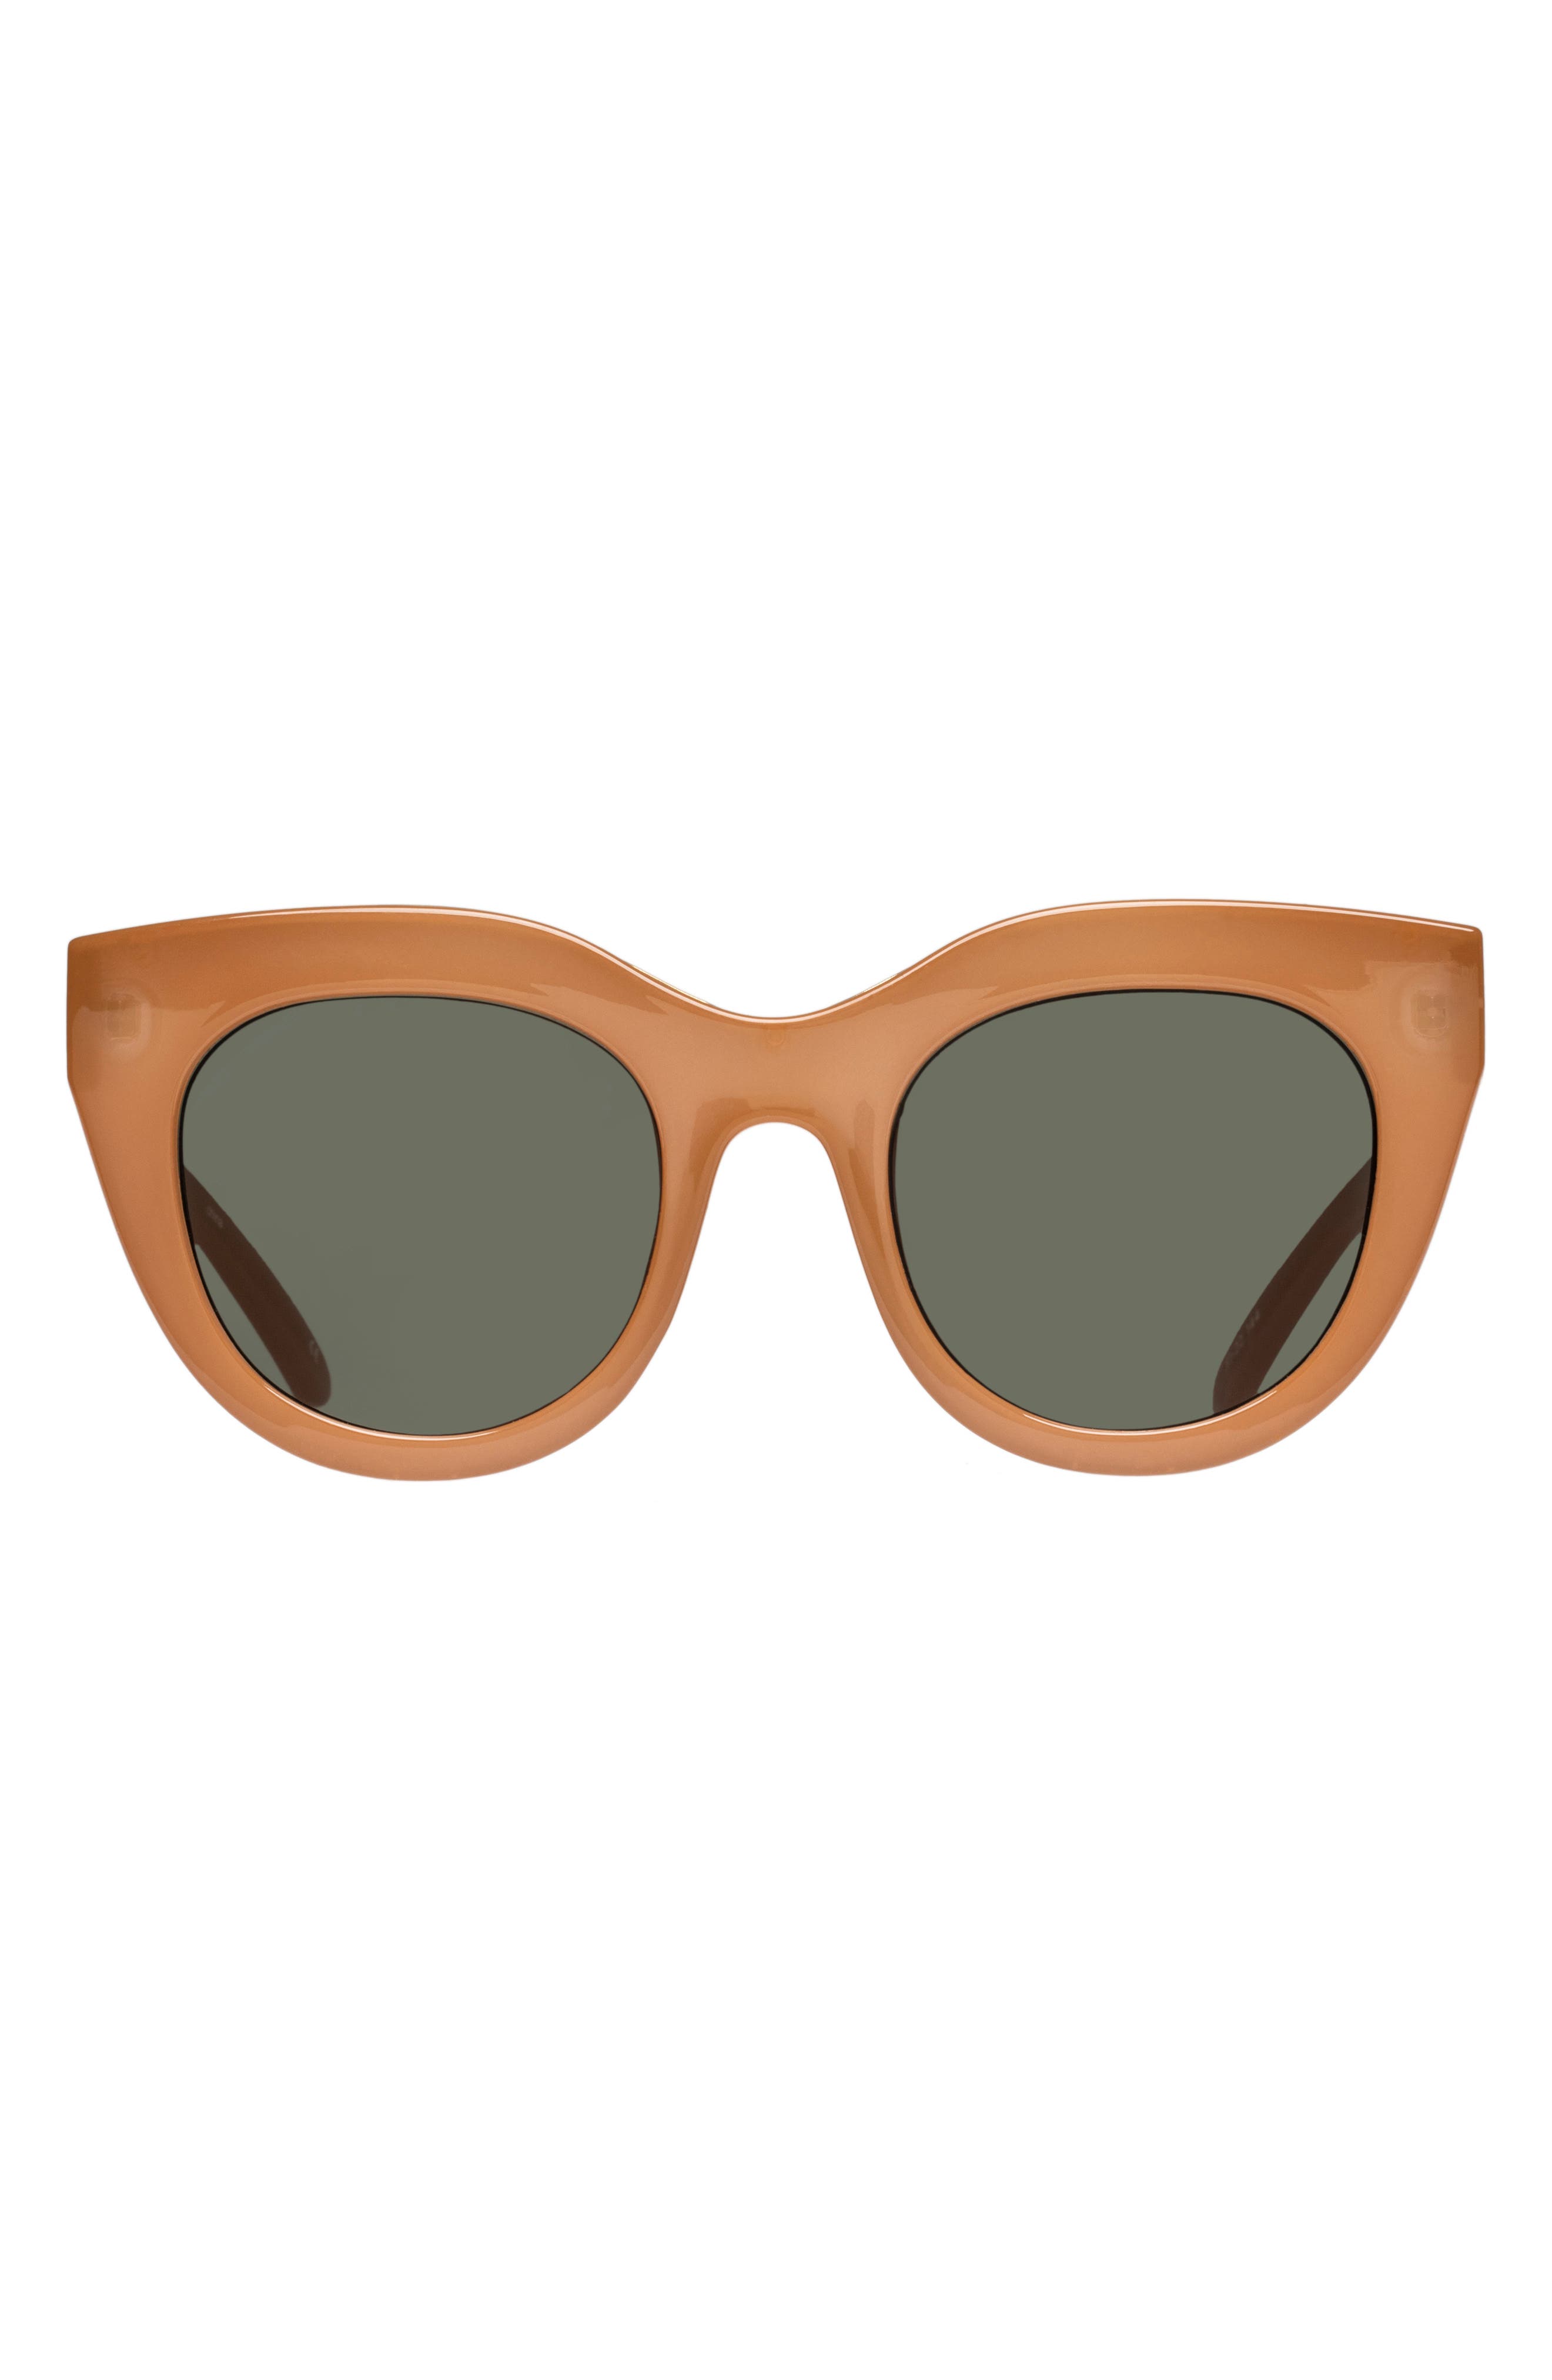 Le Specs Air Heart 51mm Sunglasses in Caramel/Khaki at Nordstrom